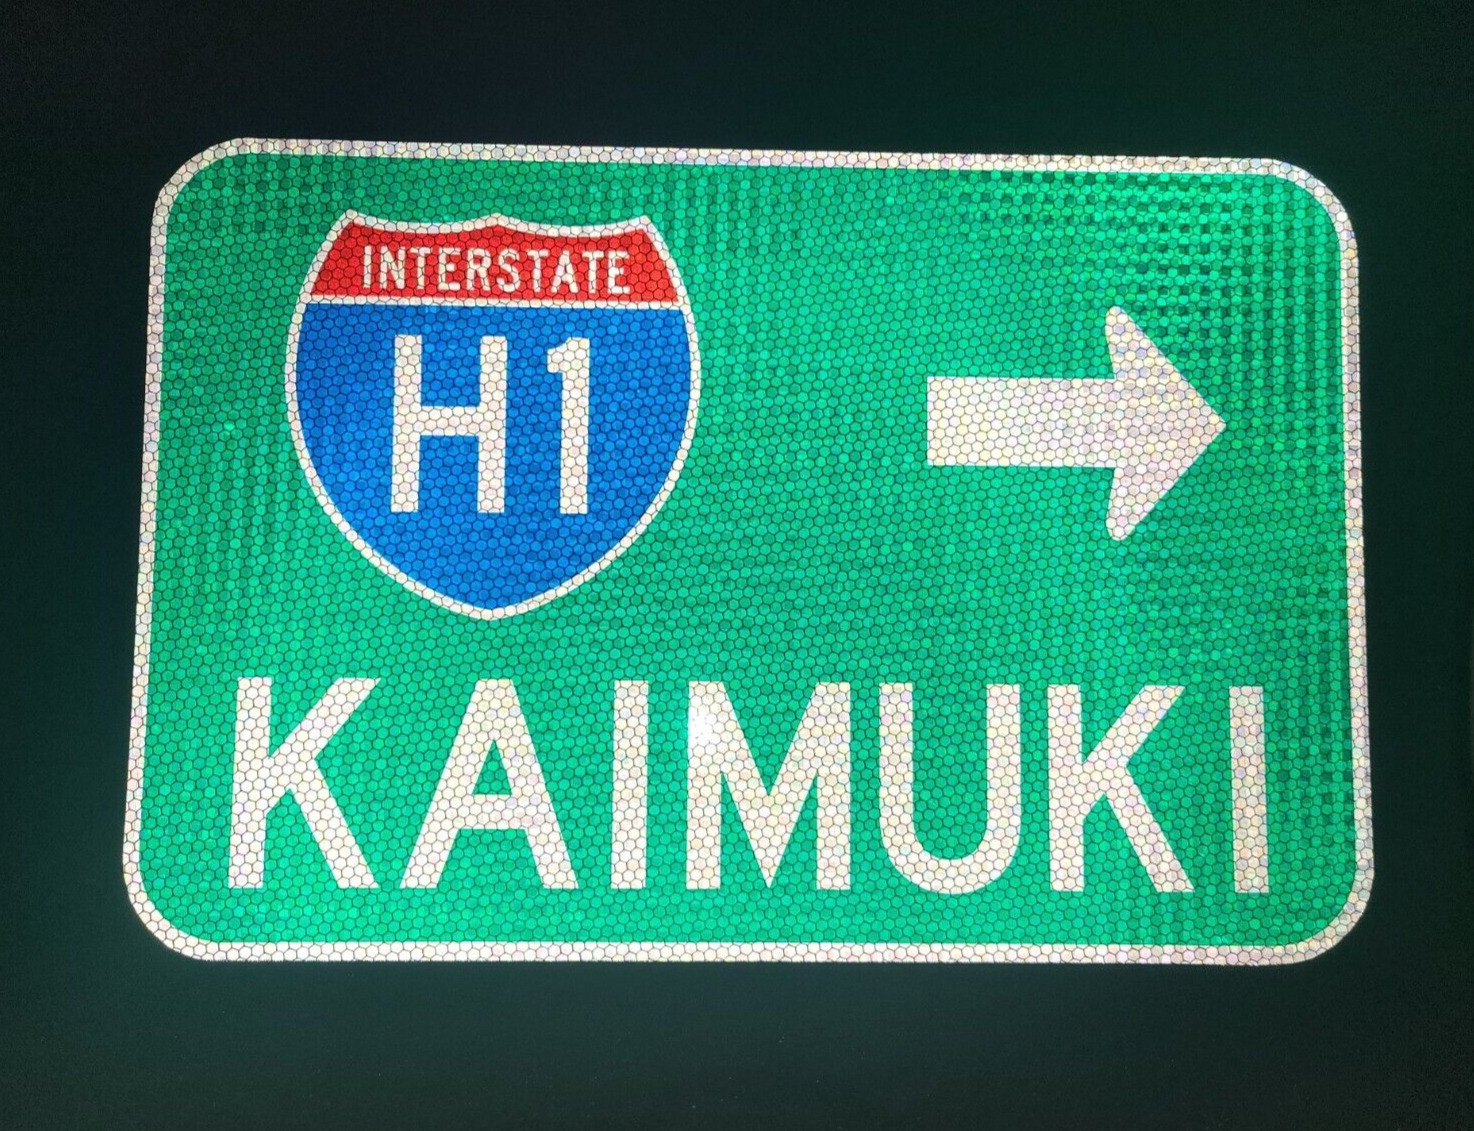 KAIMUKI Interstate H1 Hawaii route road sign 18